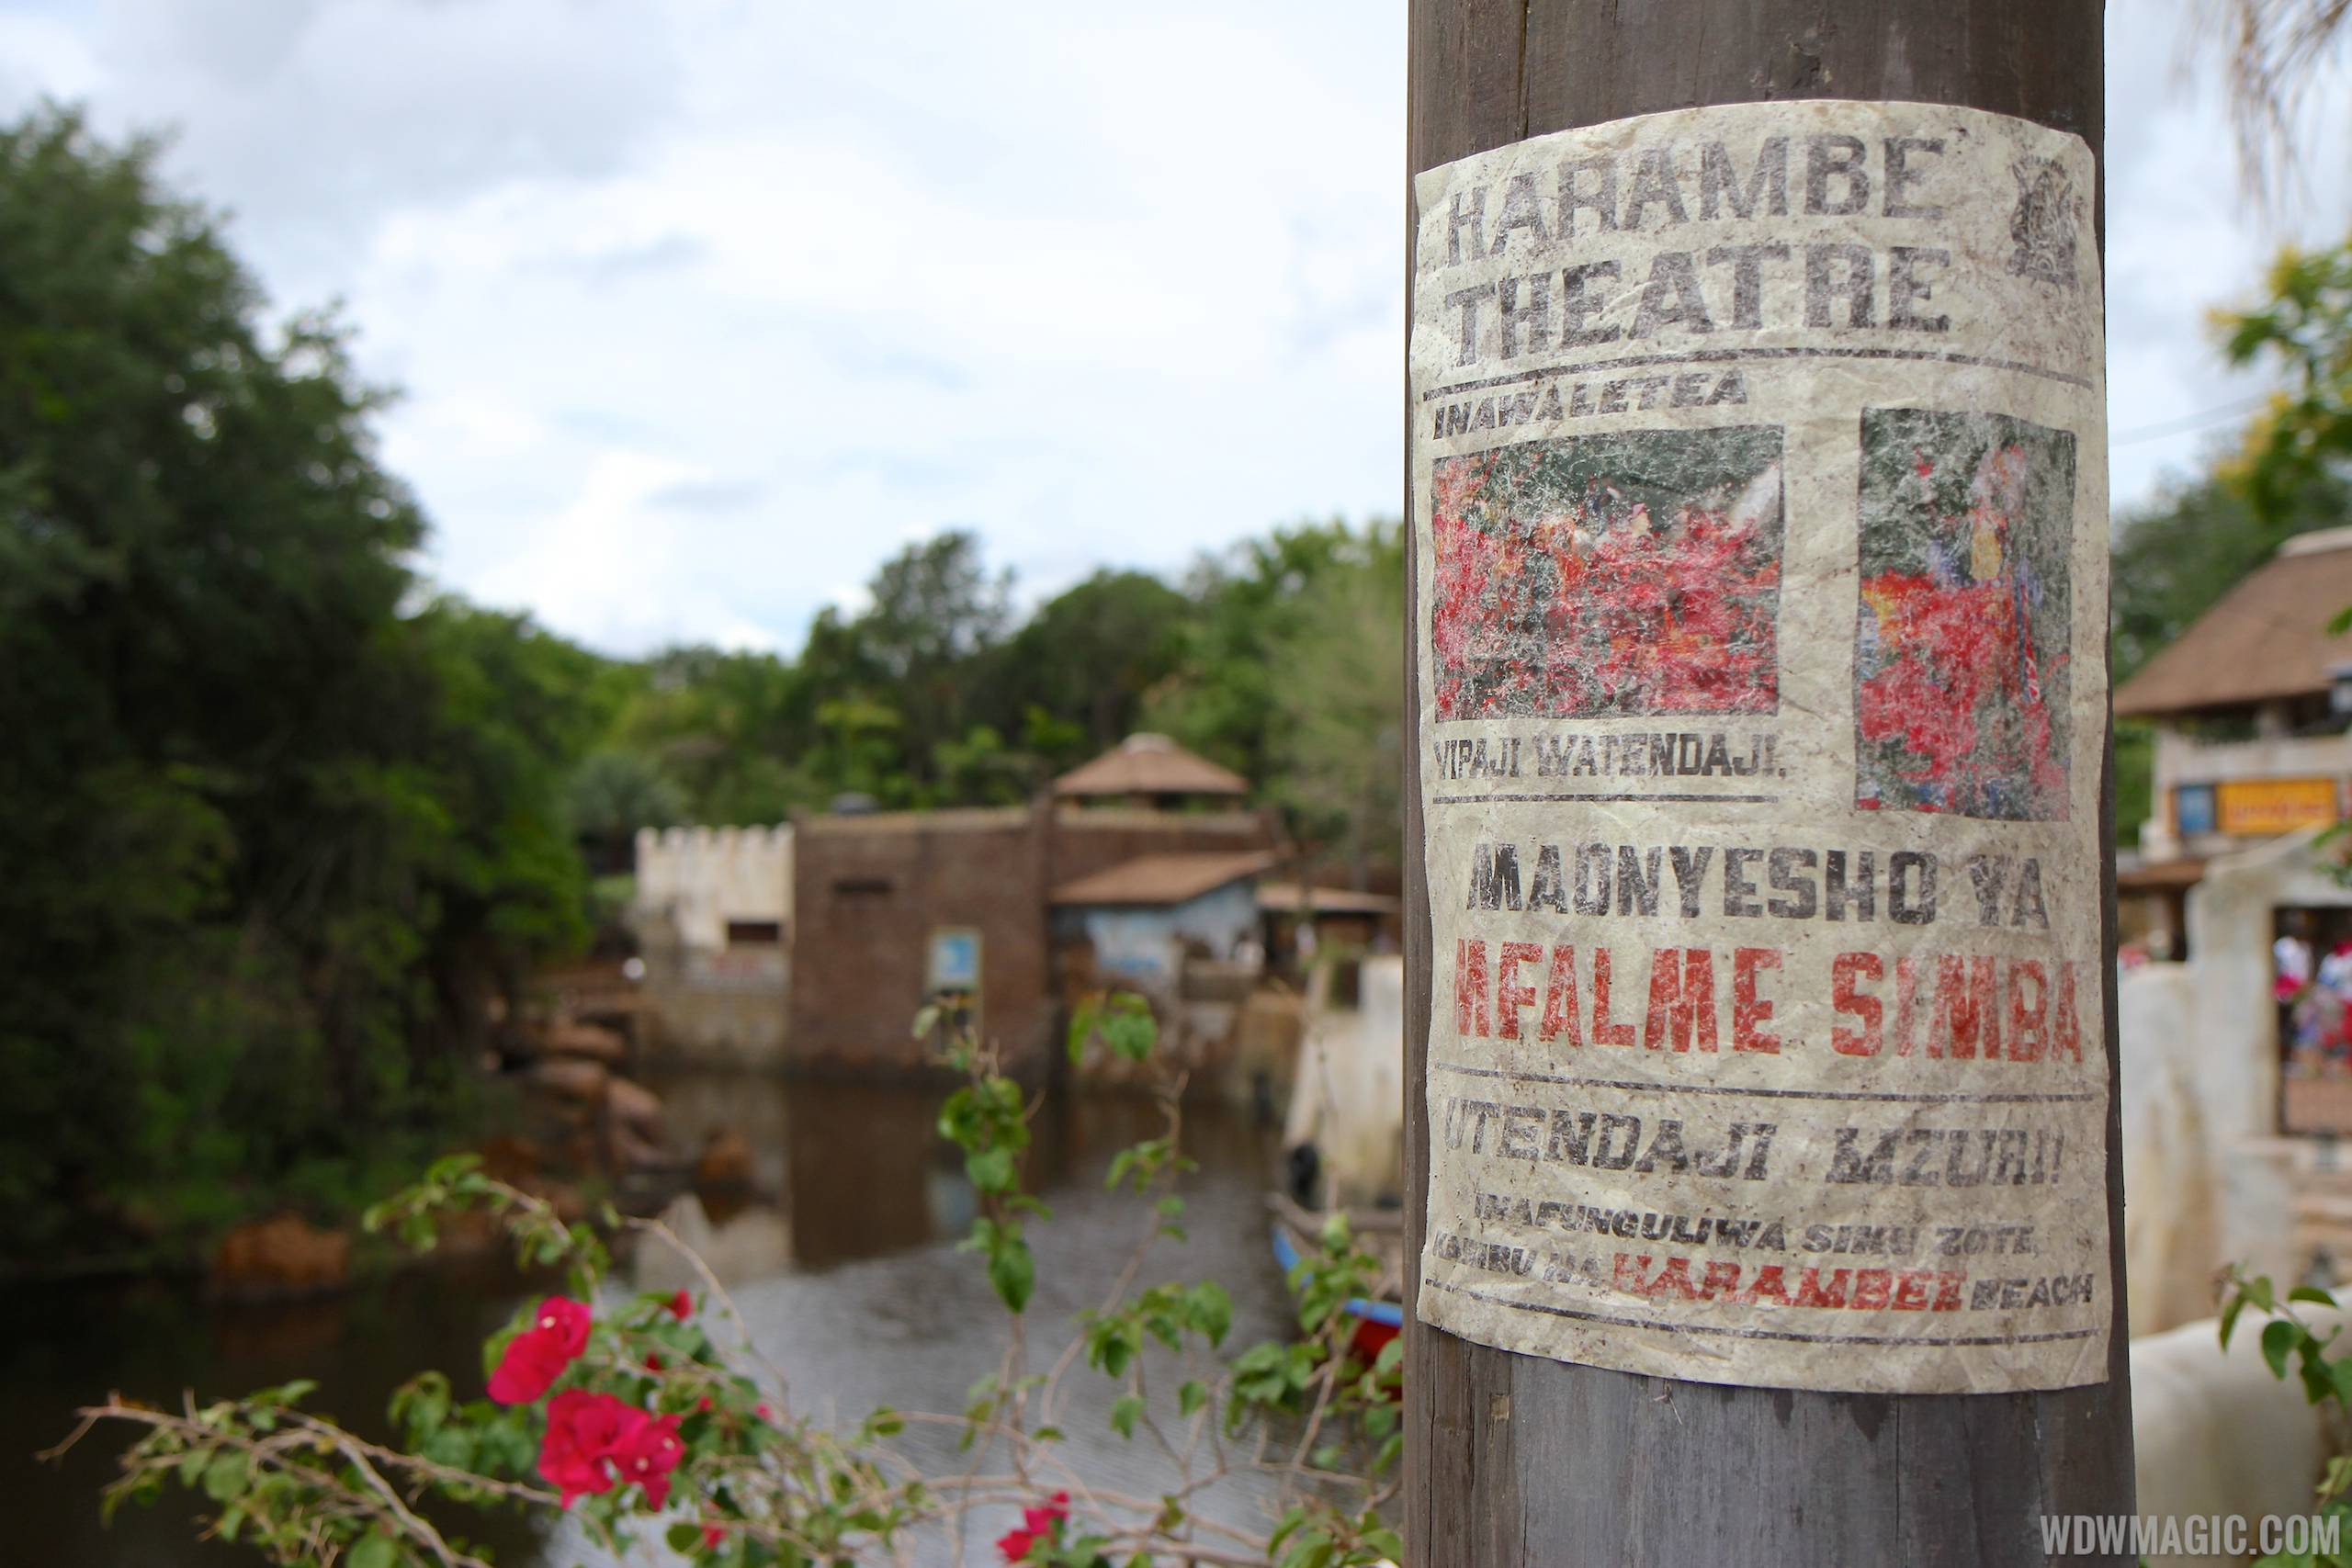 New Harambe Theatre area - Poster art